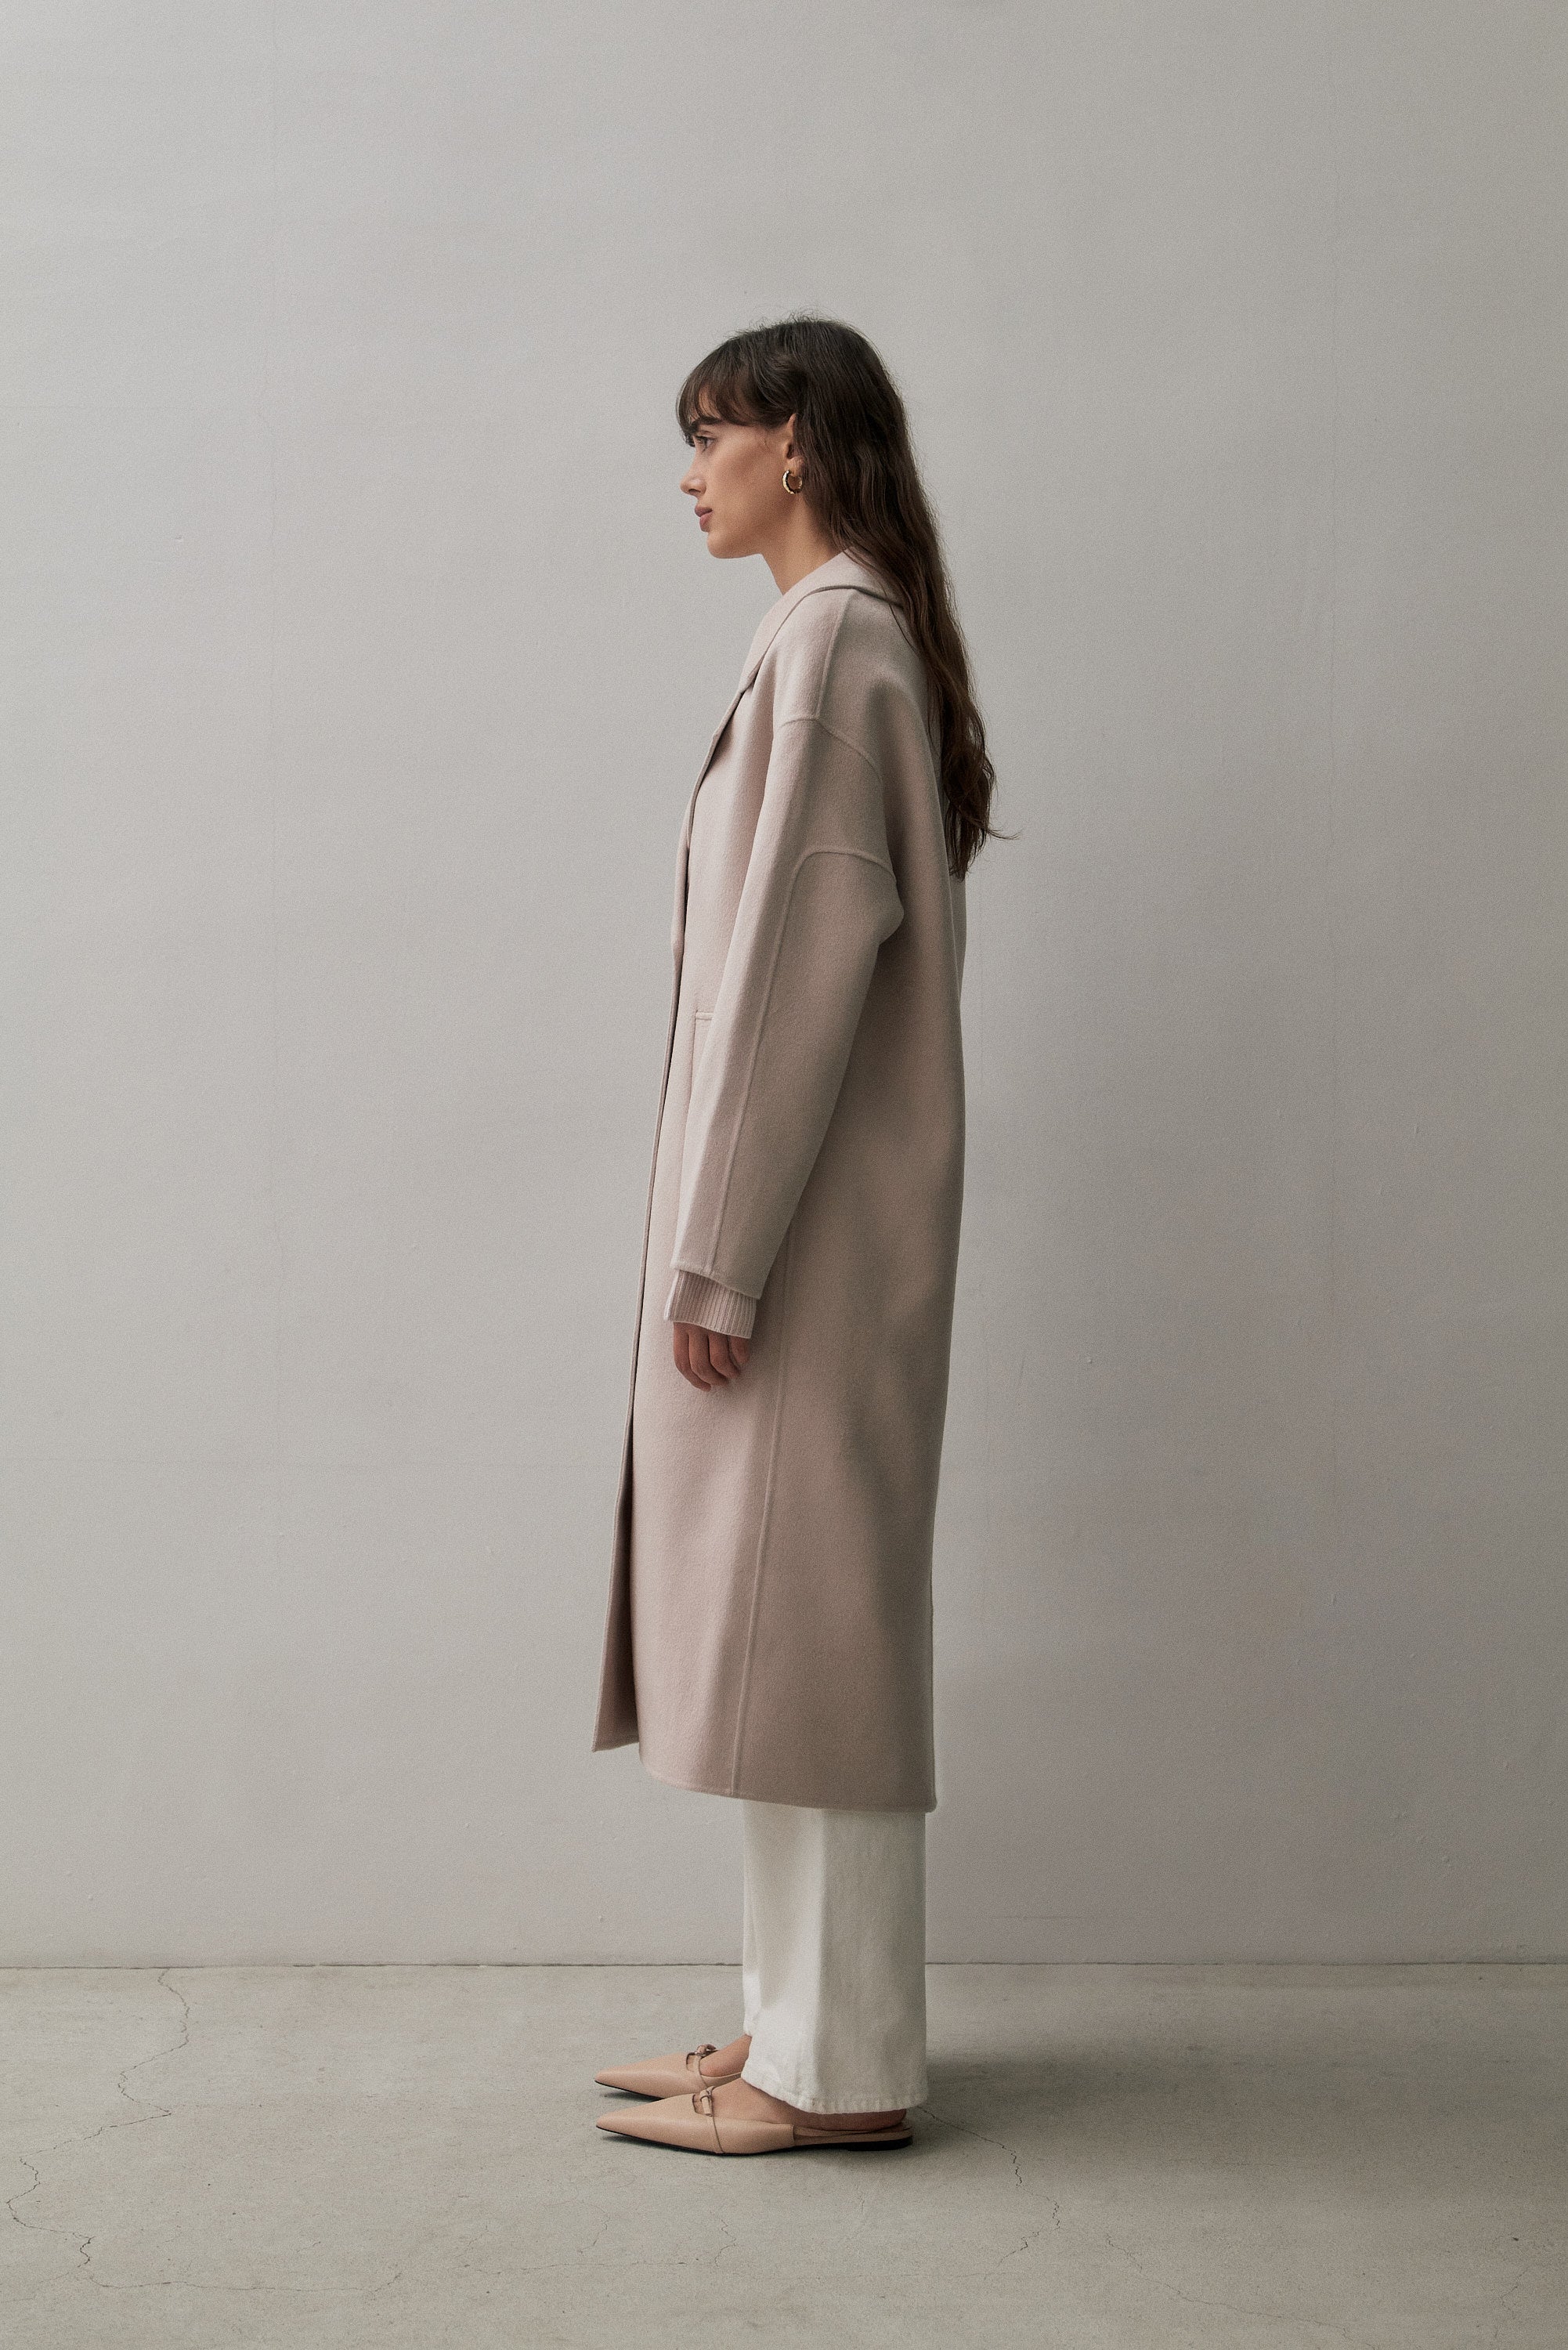 Massimo Dutti - - Long Wool Blend Check Robe Coat - Dark Grey - L